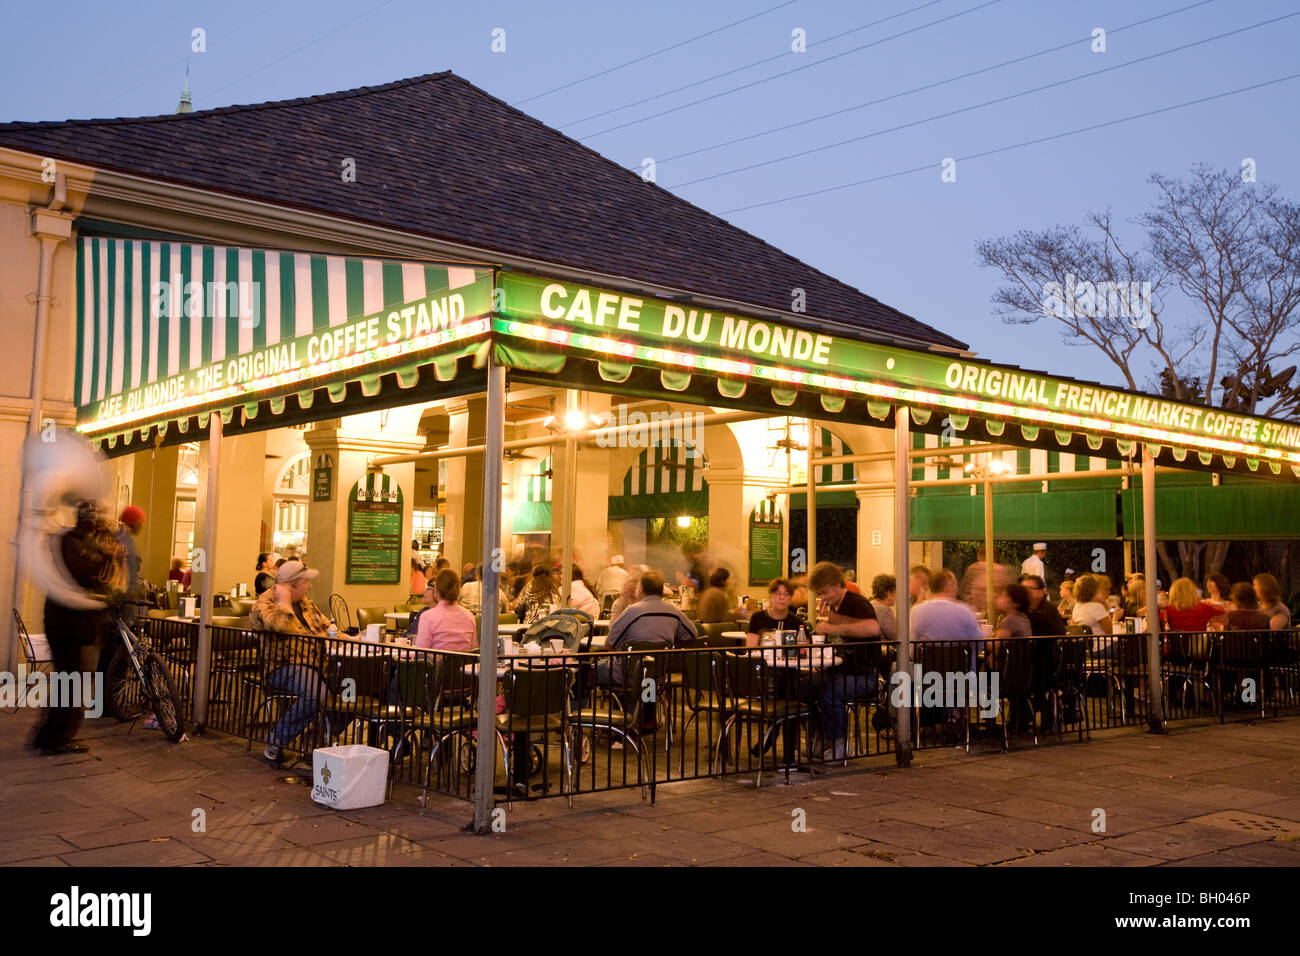 Il Cafe Du Monde, il mercato francese del caffè stand, quartiere francese, New Orleans, Louisiana Foto Stock